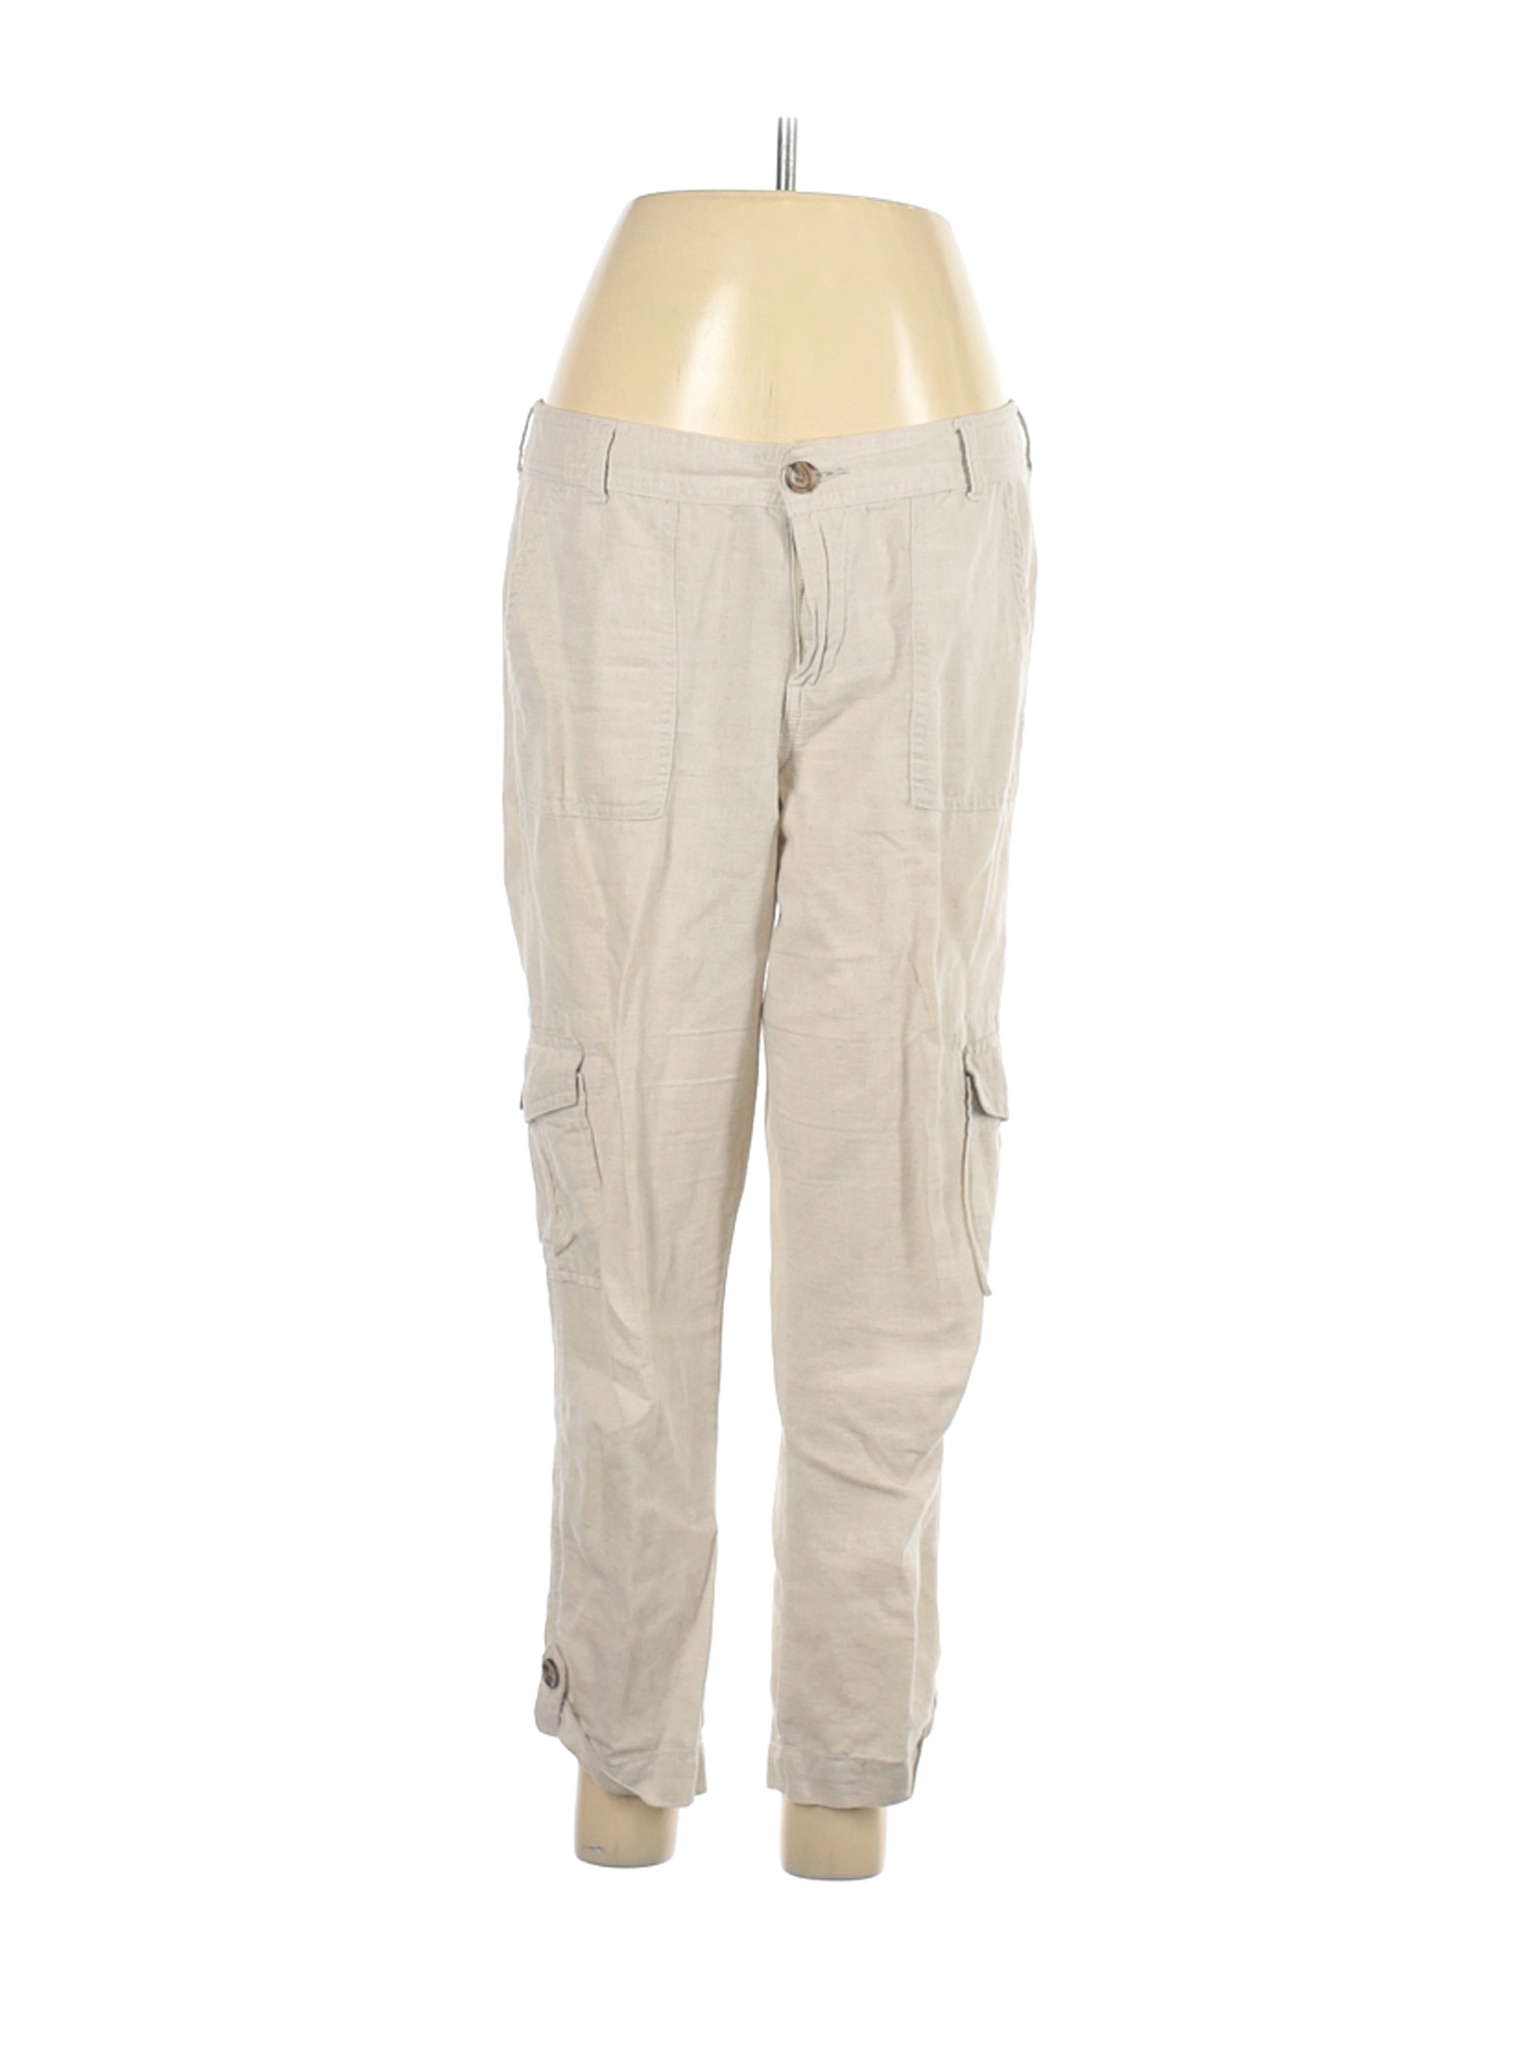 Banana Republic Factory Store Women Ivory Linen Pants 6 | eBay